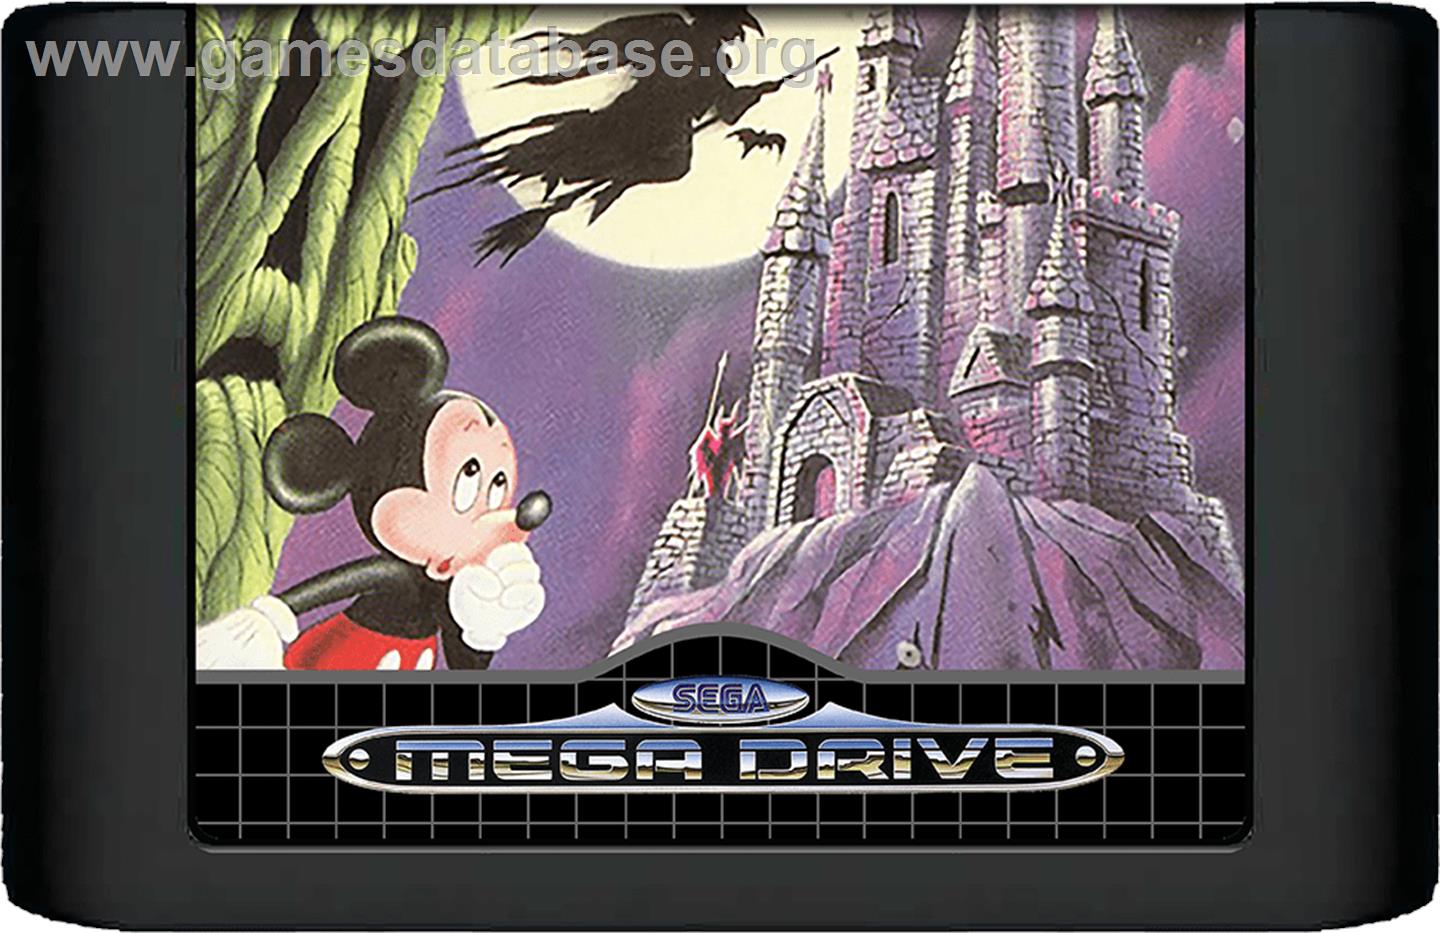 Castle of Illusion starring Mickey Mouse - Sega Genesis - Artwork - Cartridge